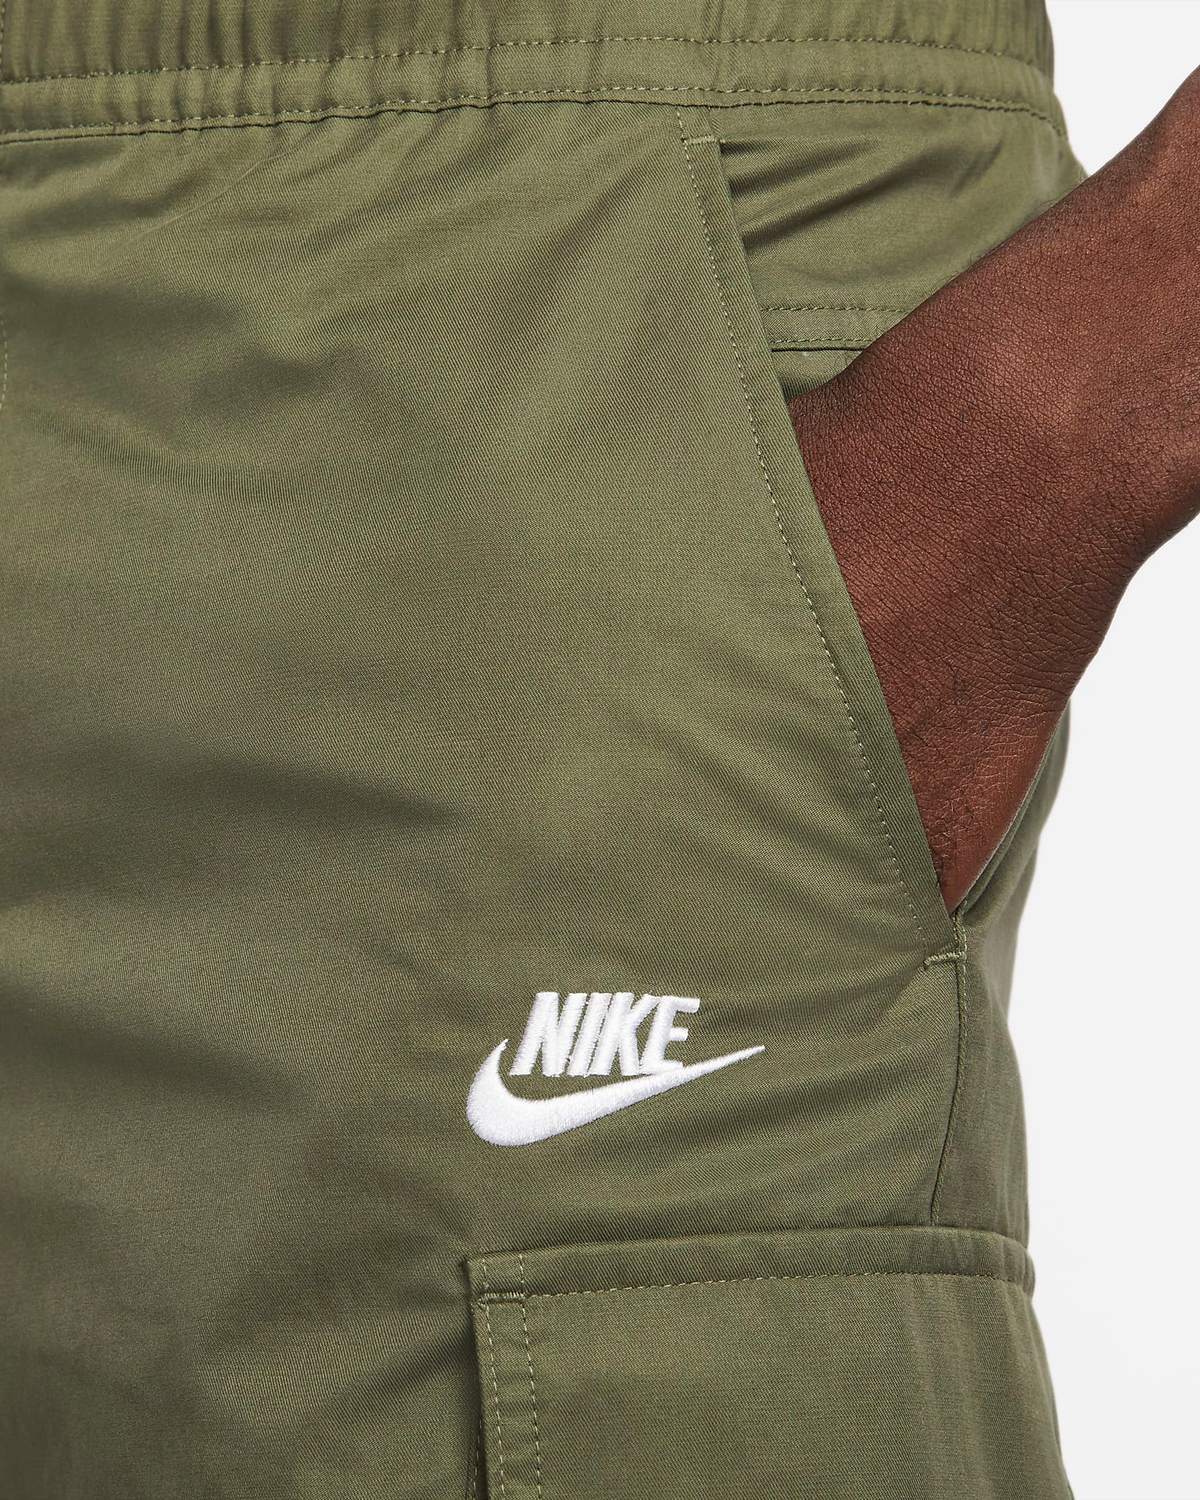 Nike-Cargo-Pants-Olive-Green-2